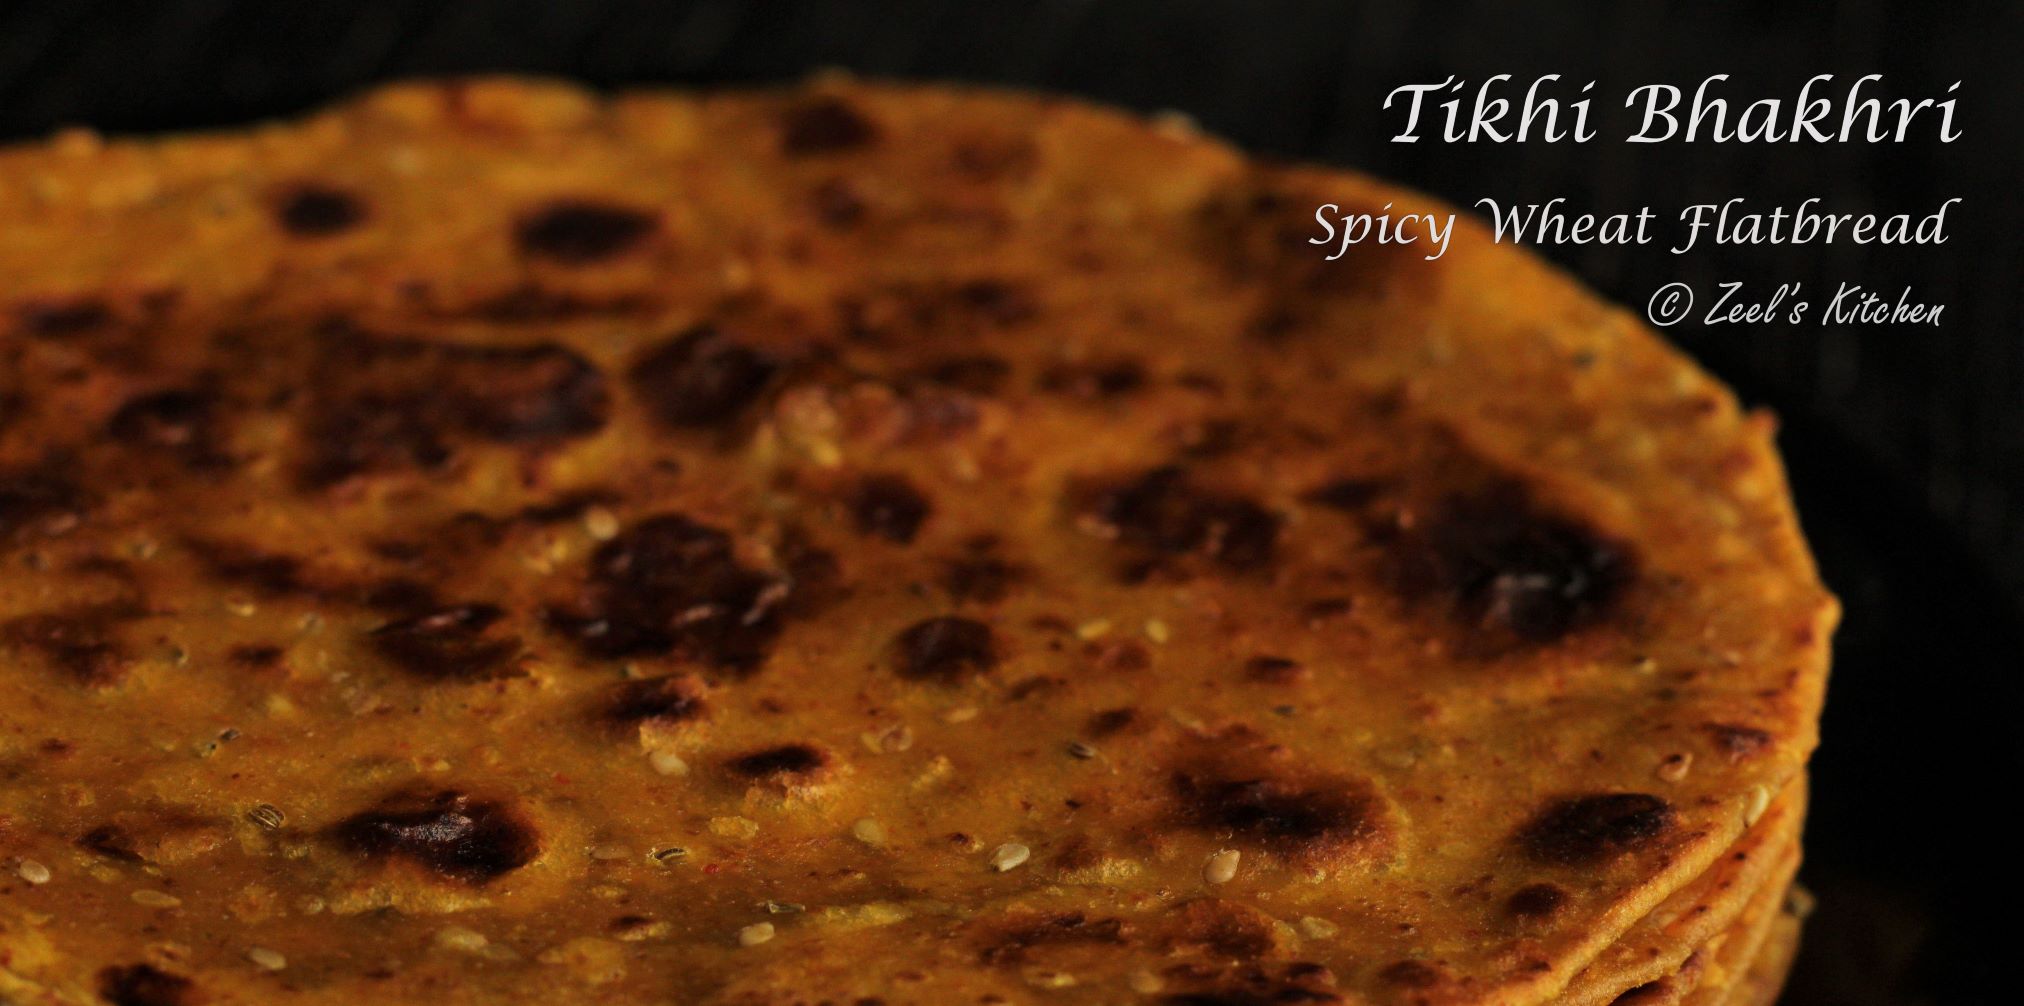 Tikhi Bhakhri | Masala Paratha | Spicy Whole Wheat Indian Flatbread Recipe